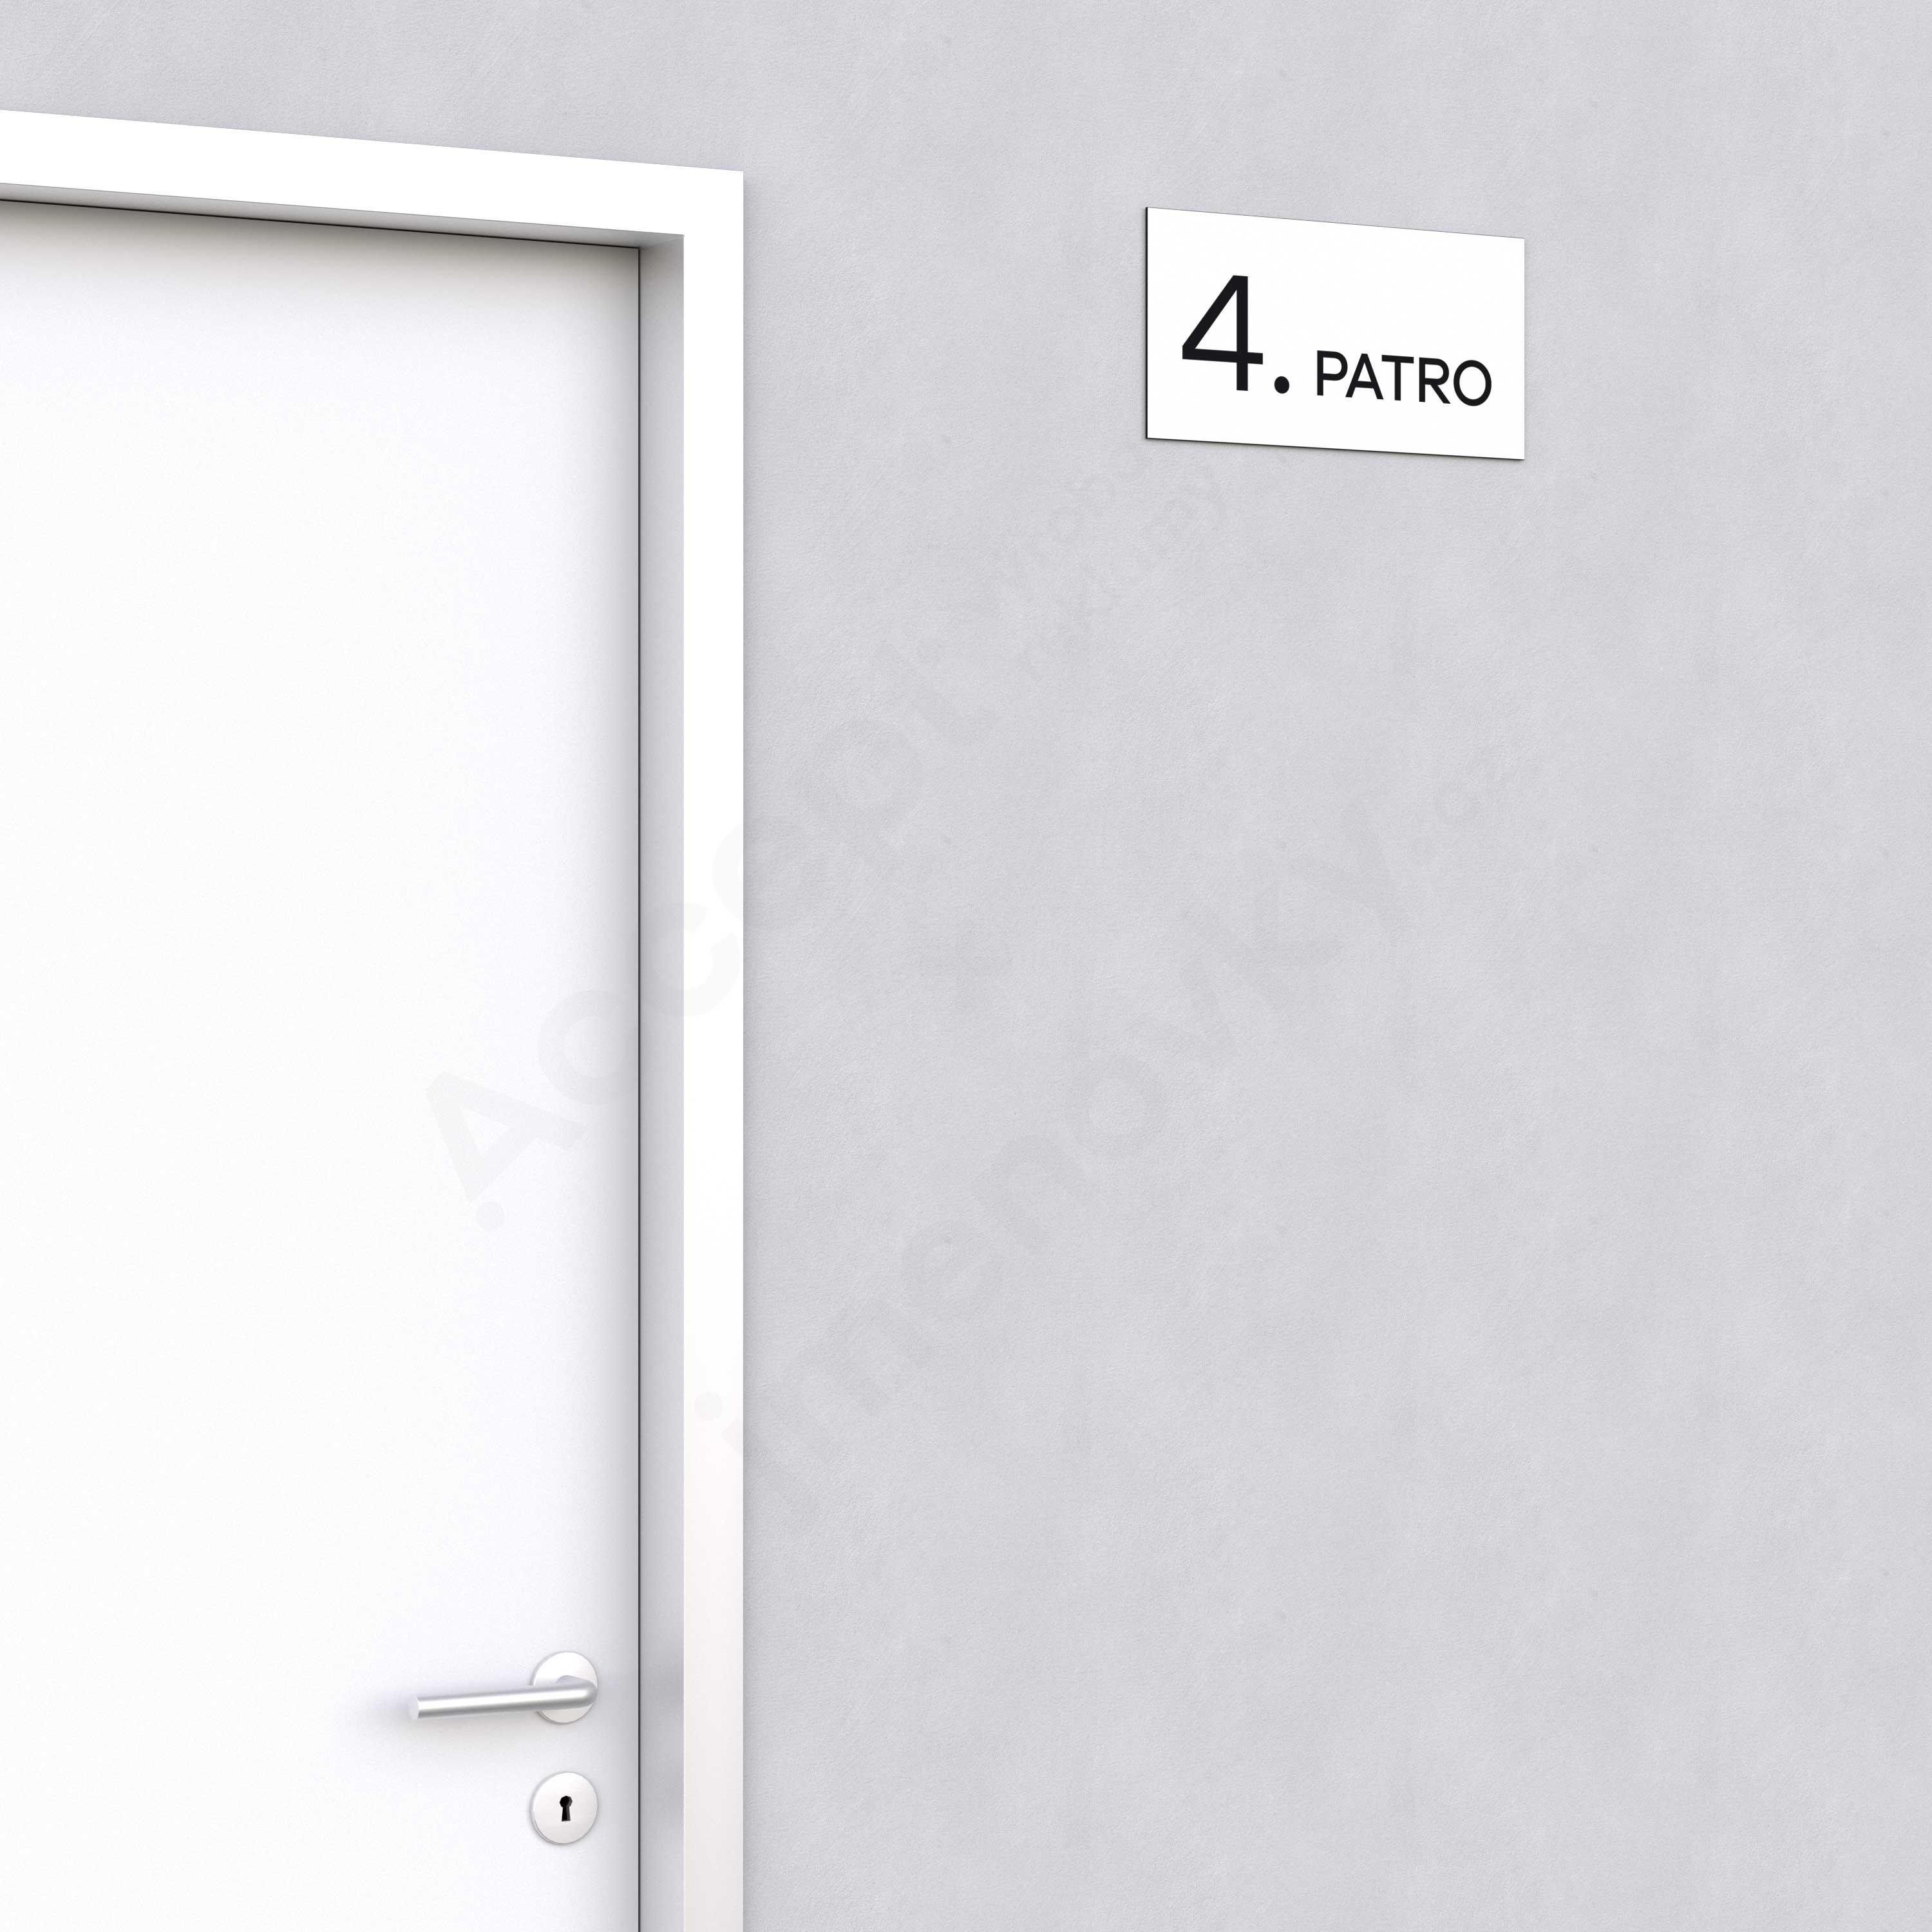 Označení podlaží "4. PATRO" - bílá tabulka - černý popis - náhled